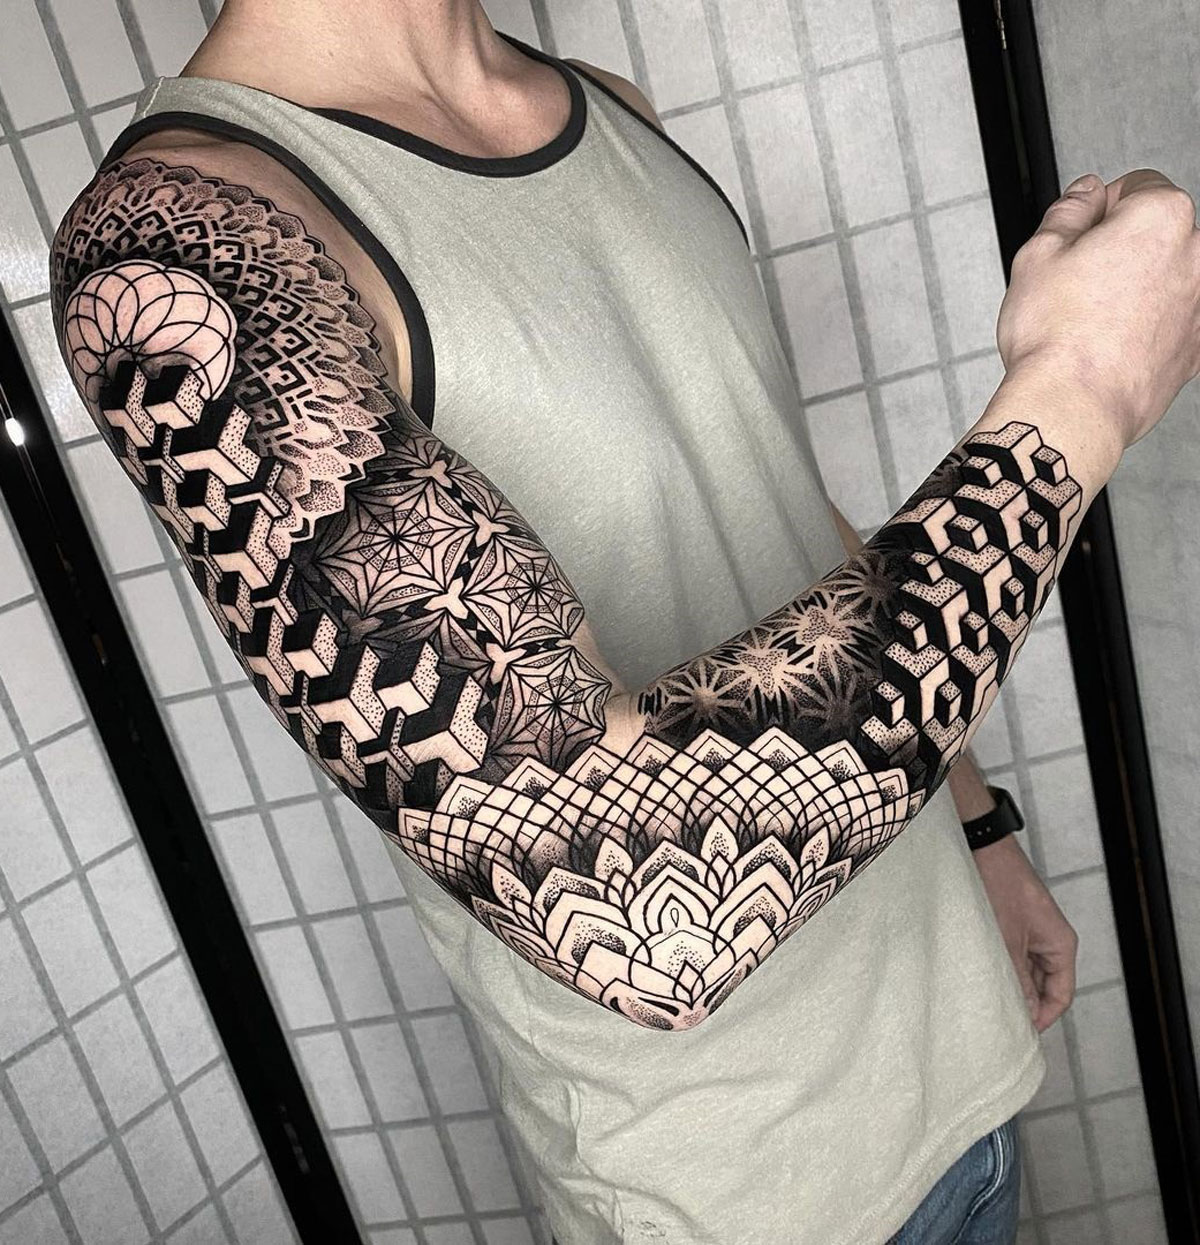 Men's Geometric 3D Sleeve With Mandalas | Best Tattoo Ideas For Men & Women